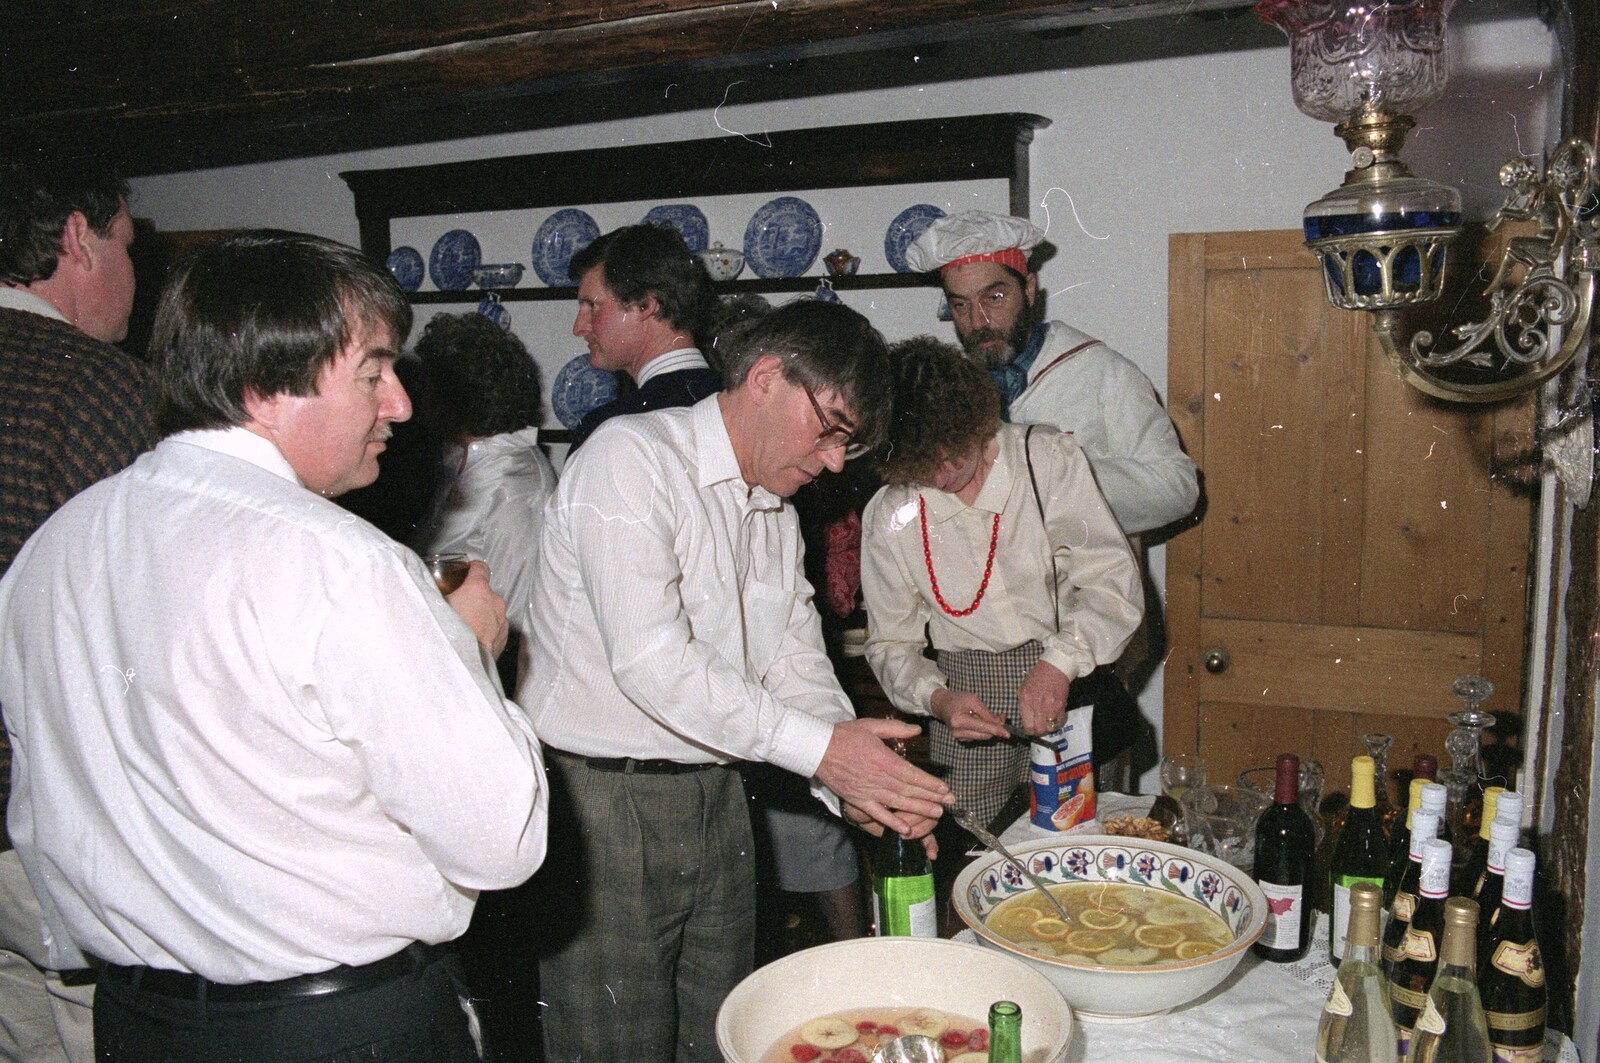 Derek gets a ladle-full from Pancake Day in Starston, Norfolk - 27th February 1990